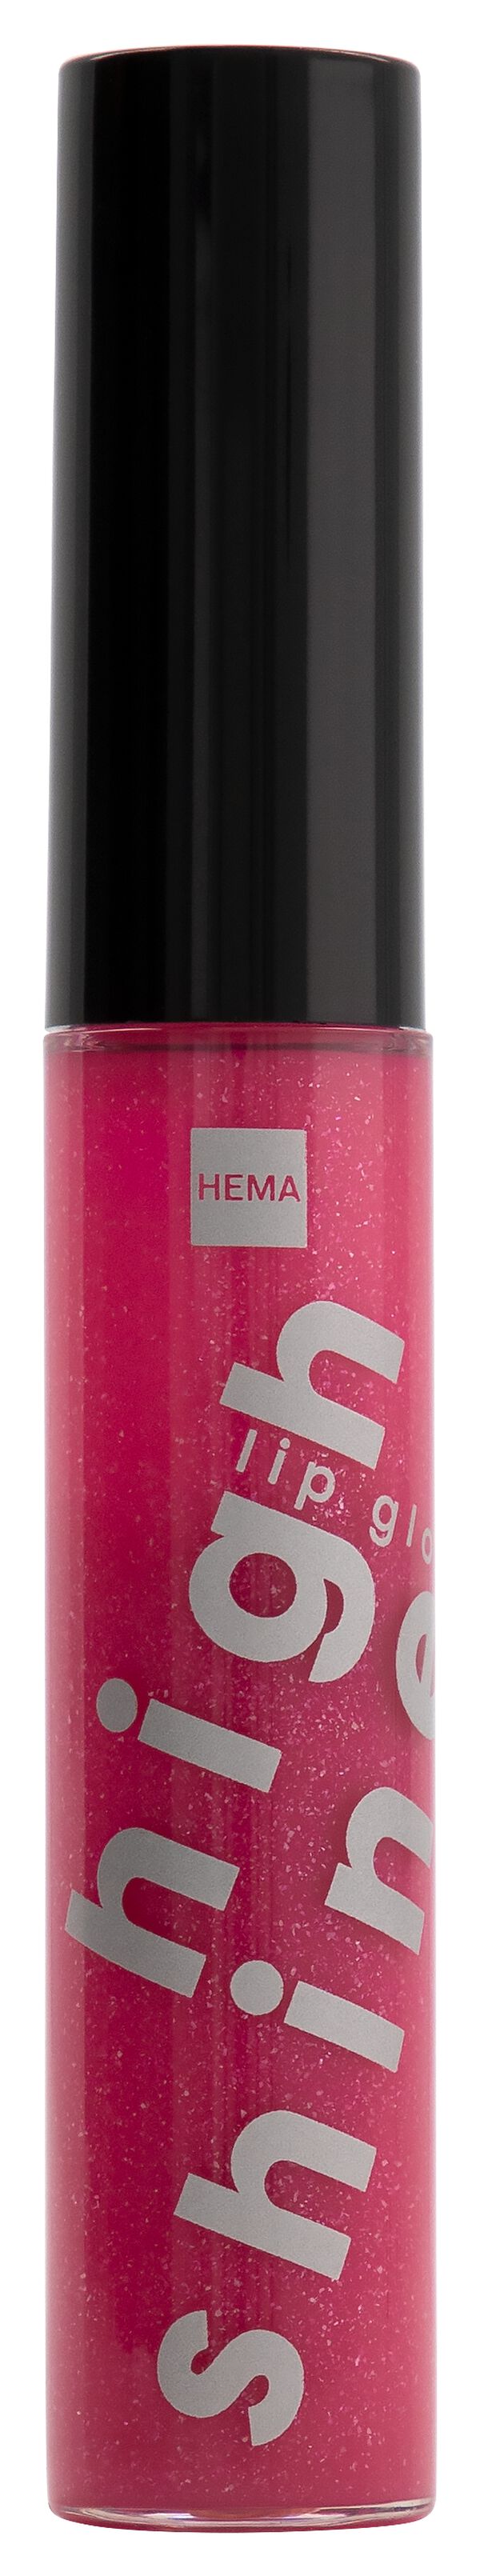 hoogglanzende lipgloss bright pink - 11230258 - HEMA